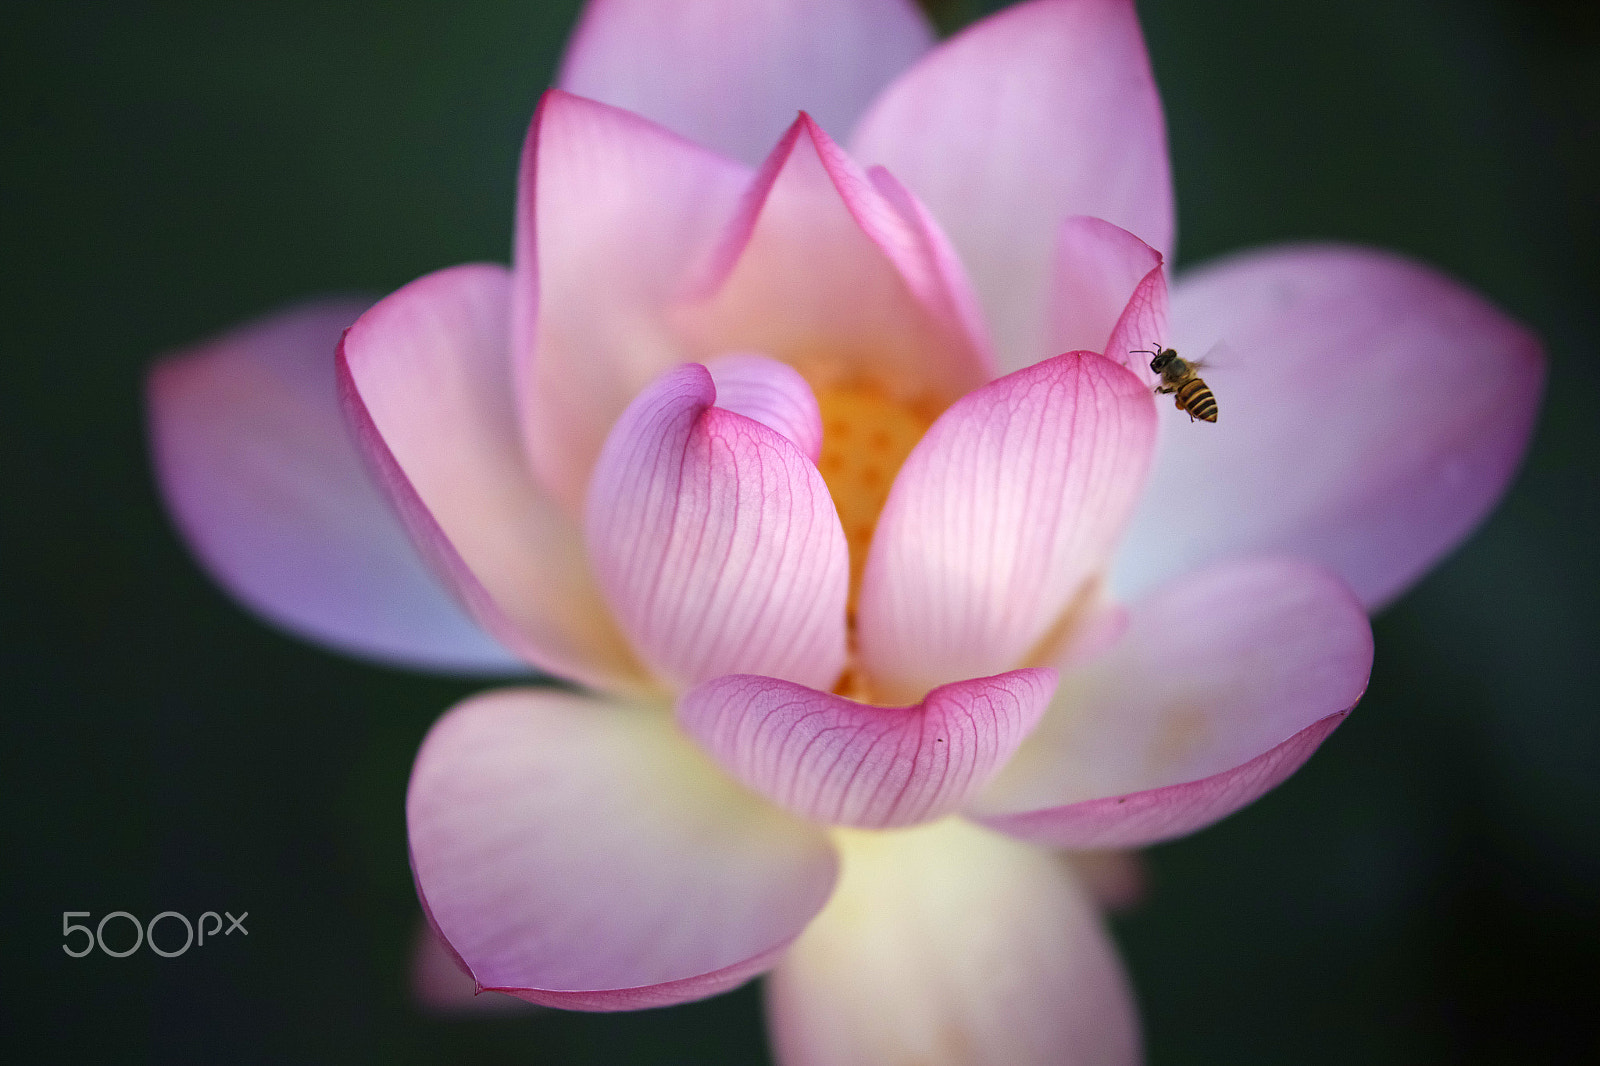 Sigma sd Quattro sample photo. Lotus flower after rain photography